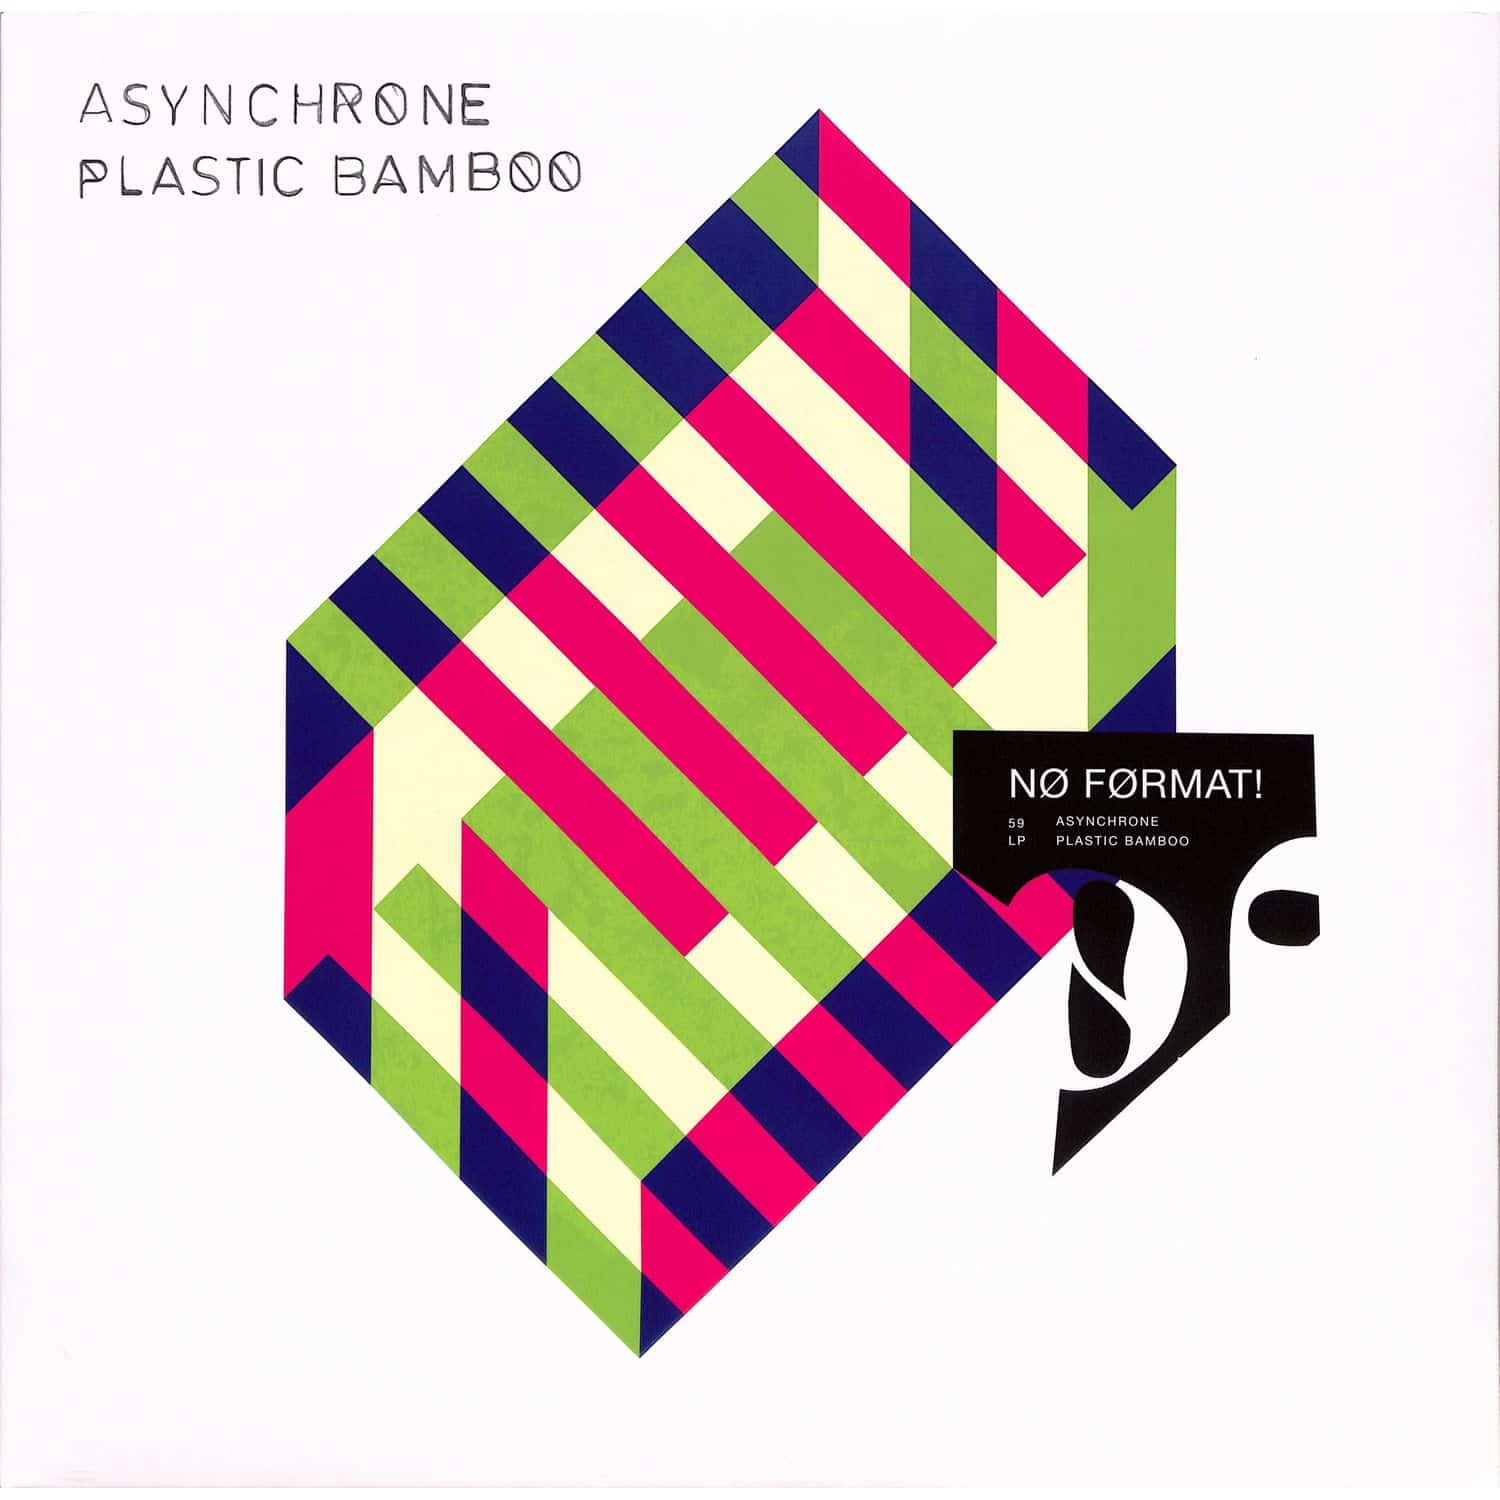 Asynchrone - PLASTIC BAMBOO 